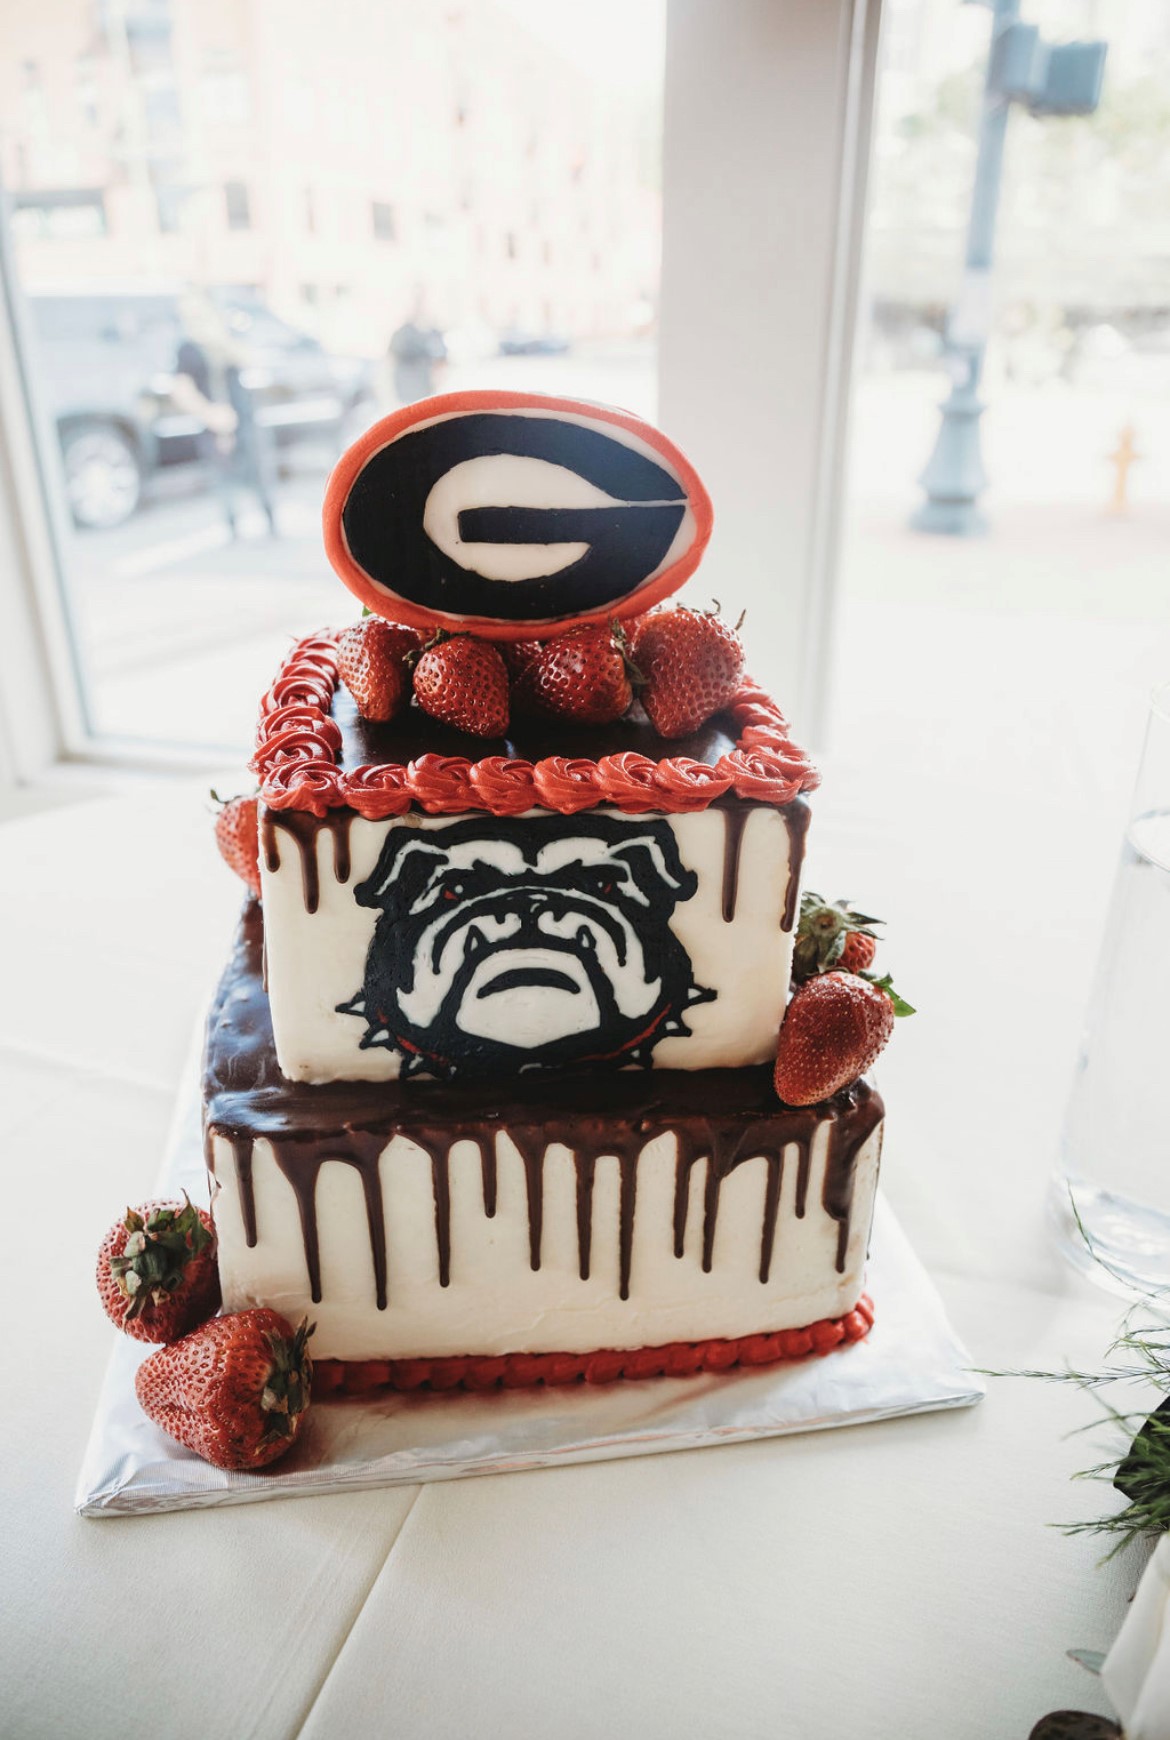 GA grooms cake